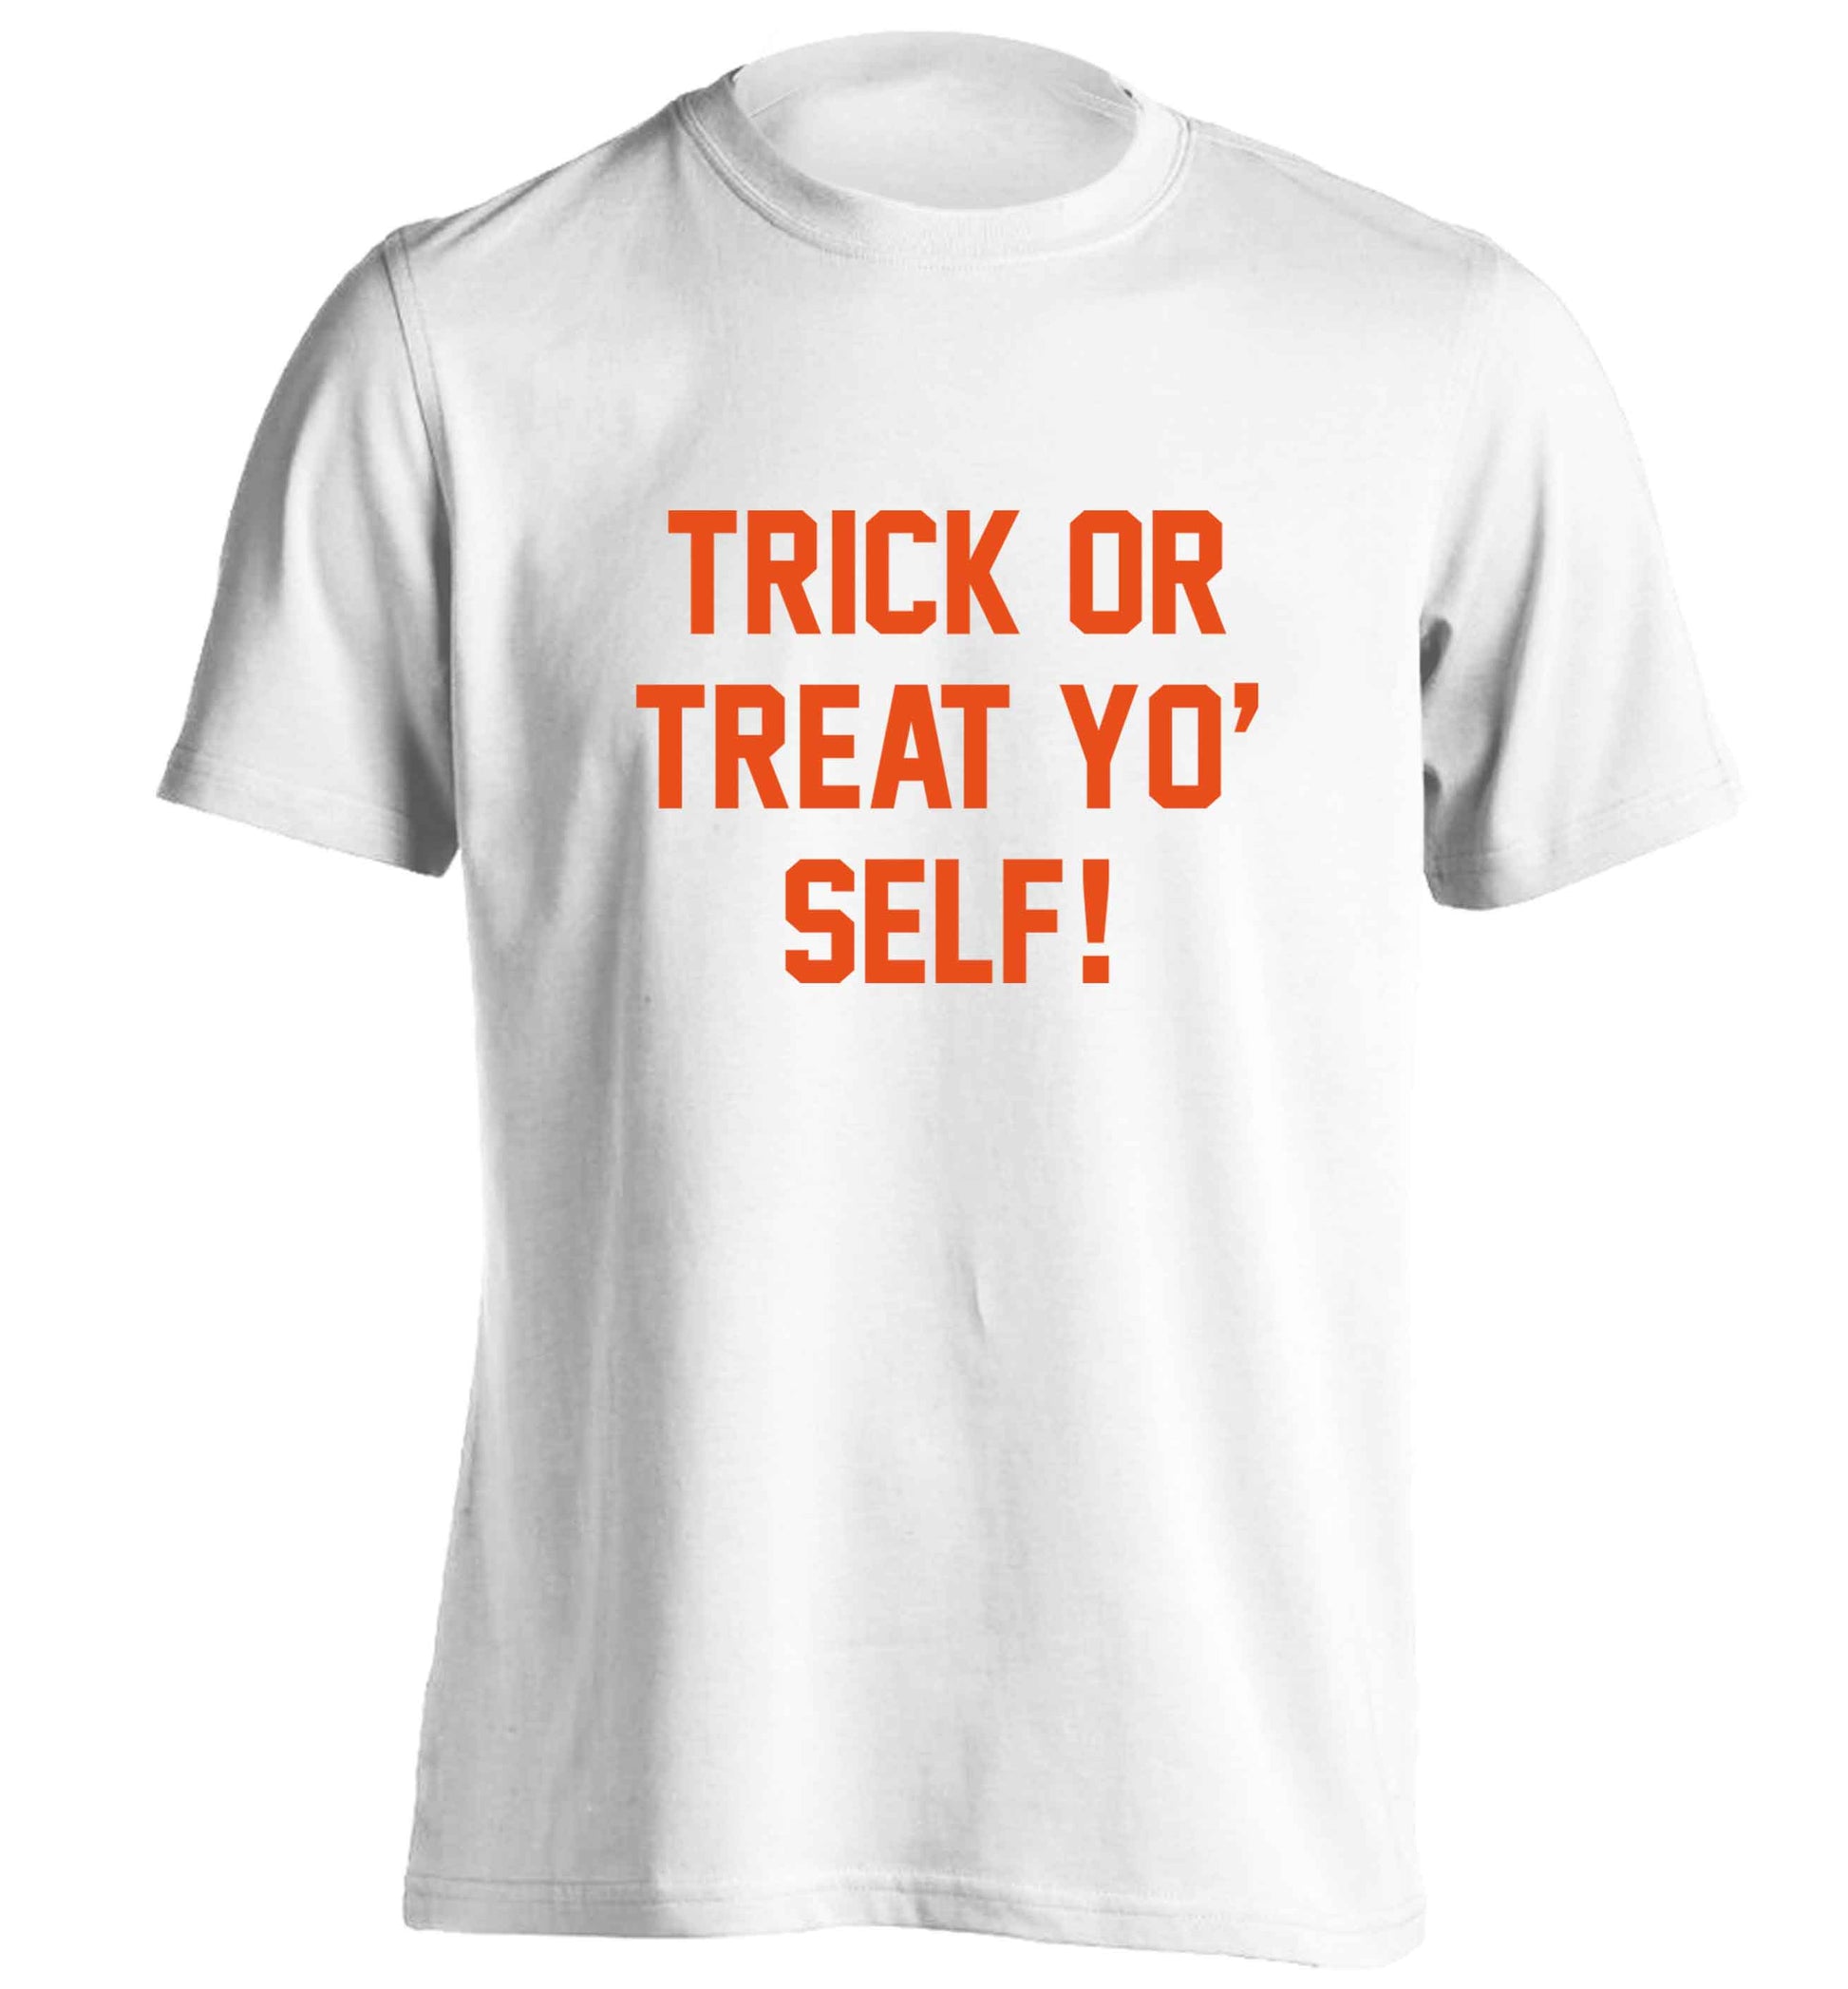 Trick or Treat Yo' Self adults unisex white Tshirt 2XL